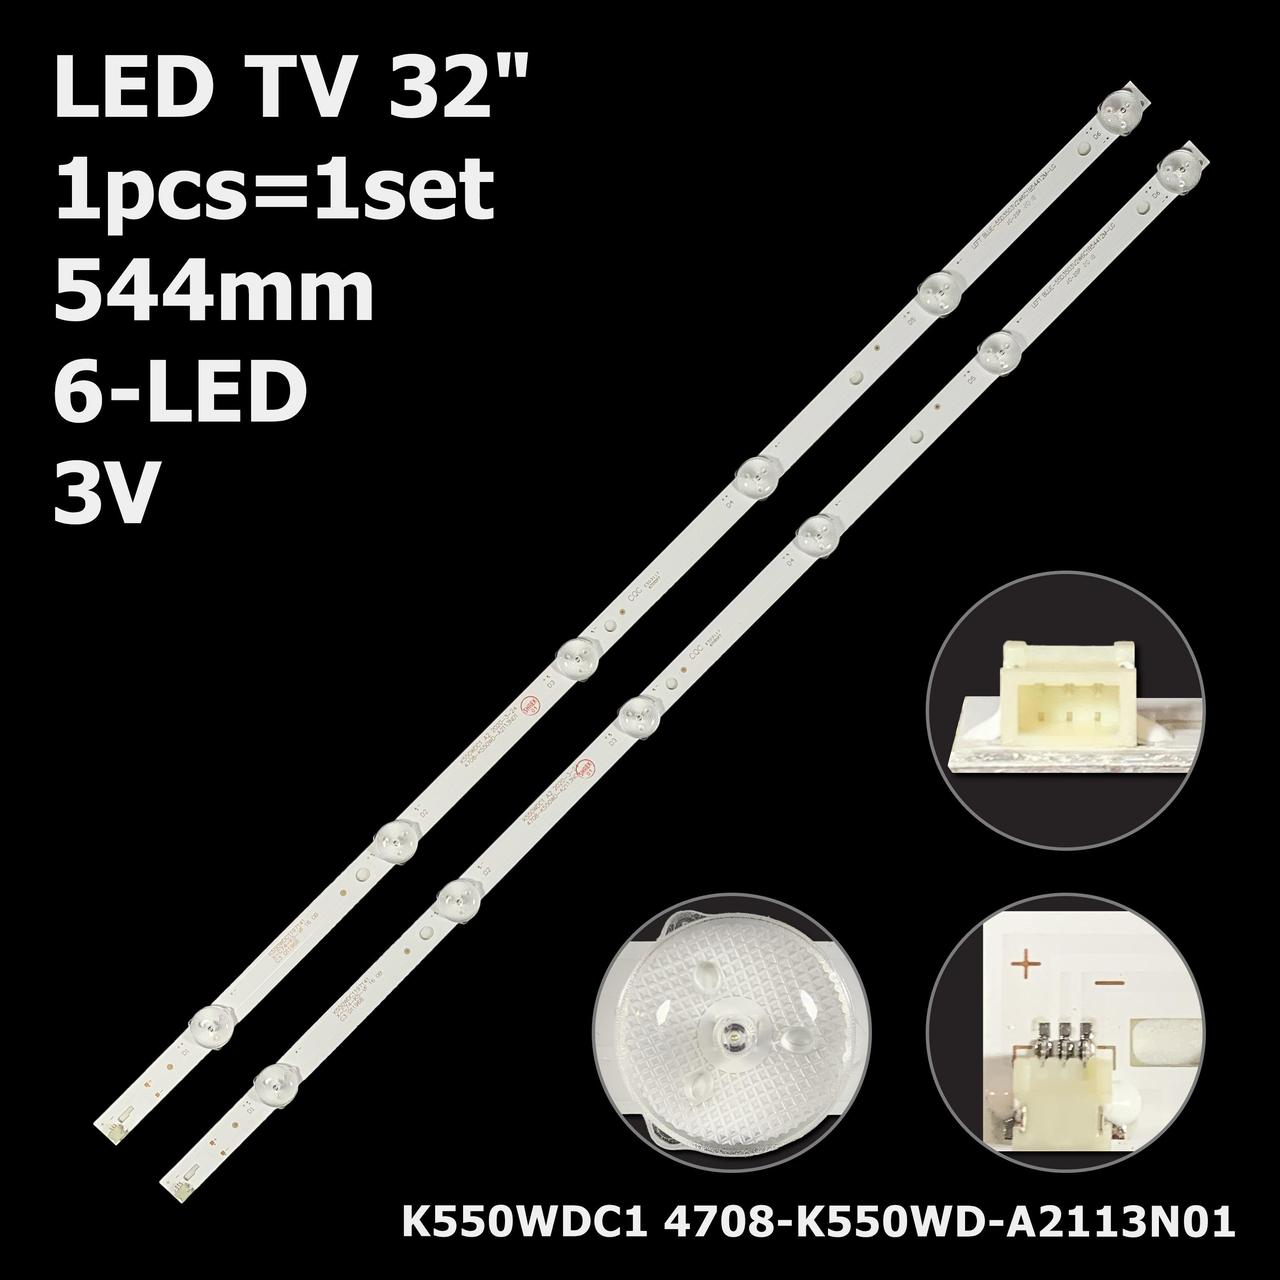 LED підсвітка TV 32" K550WDC1 A2 K550WDC1197141 4708-K550WD-A2113N01 LEFT BLUE-55D3503V2W6C1B54412M-LG 1 шт.